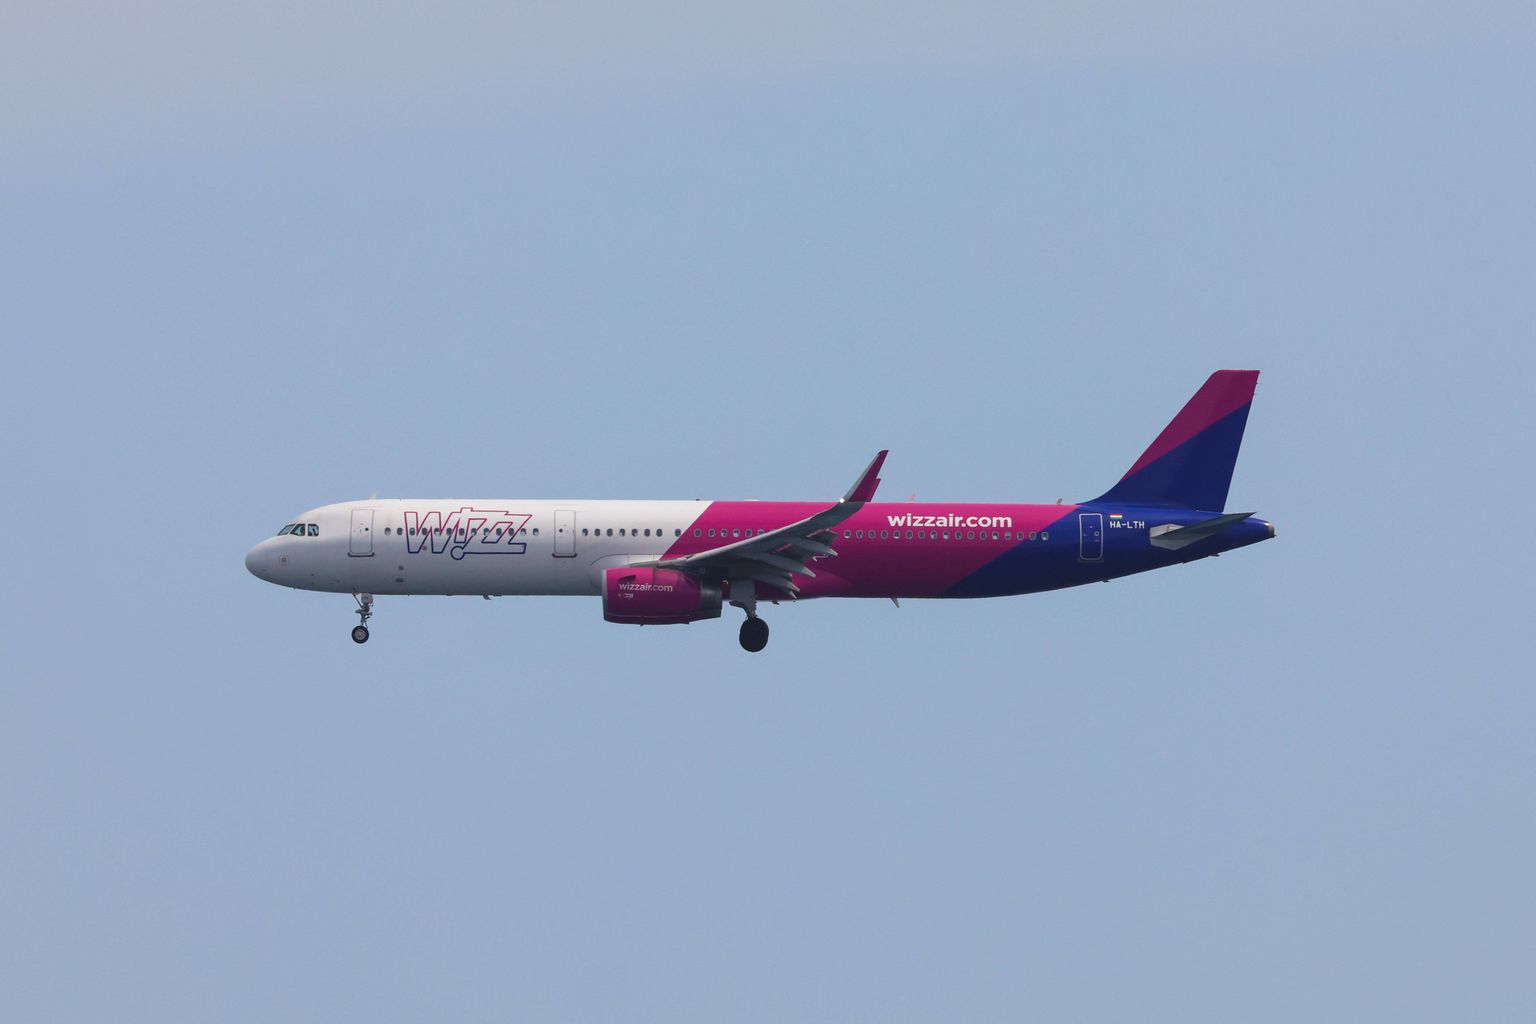 Ungari odavlennufirma Wizz Air üks Airbus A320 lennukitest